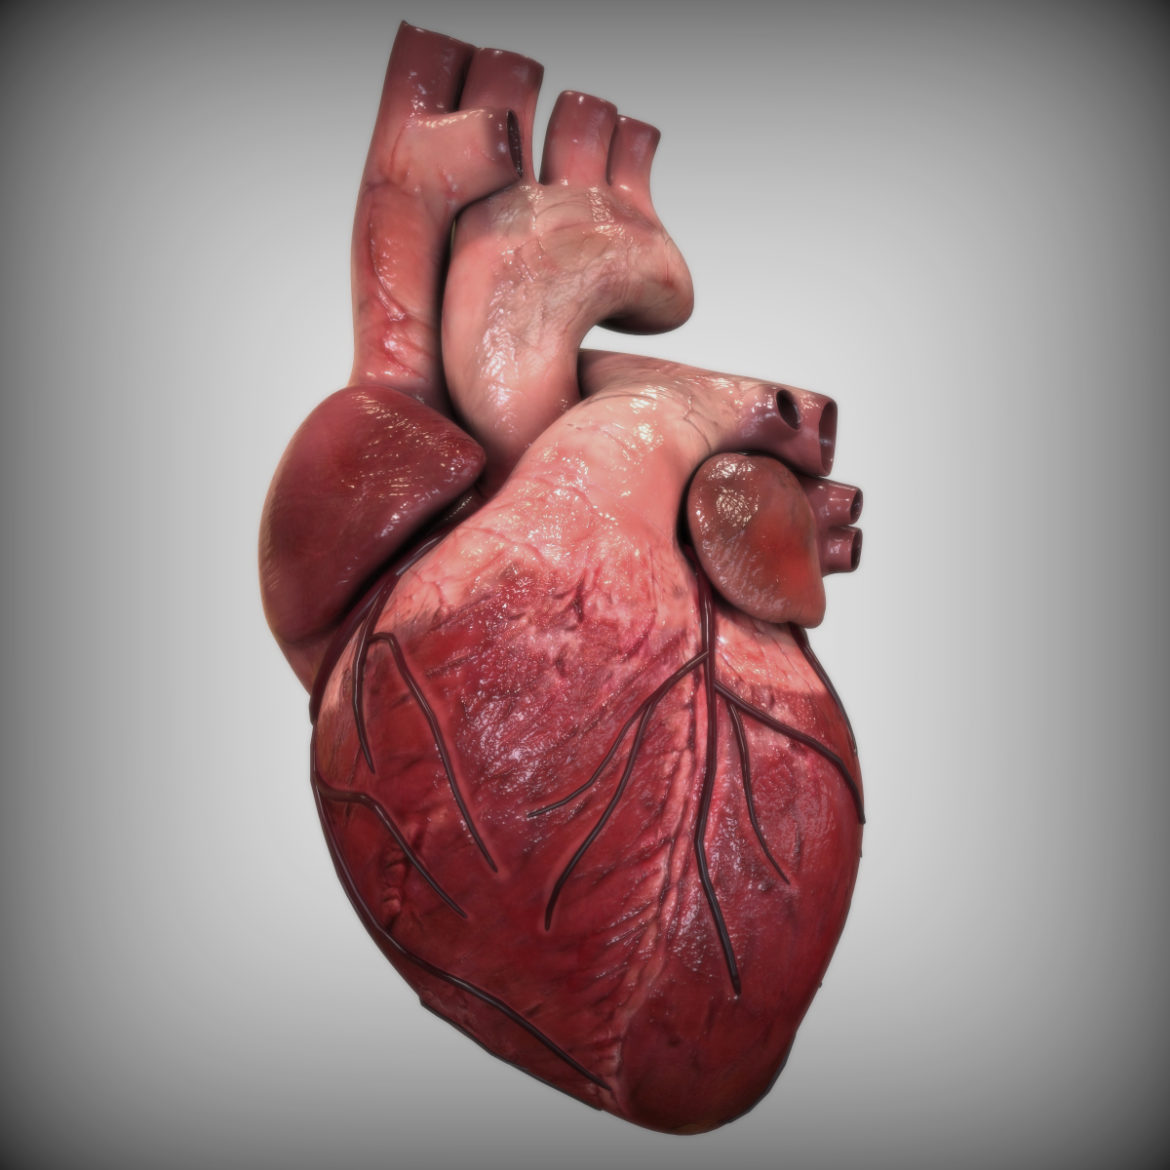  <a class="continue" href="https://www.flatpyramid.com/3d-models/medical-3d-models/anatomy/human-heart-anatomy/">Continue Reading<span> Human Heart Anatomy</span></a>